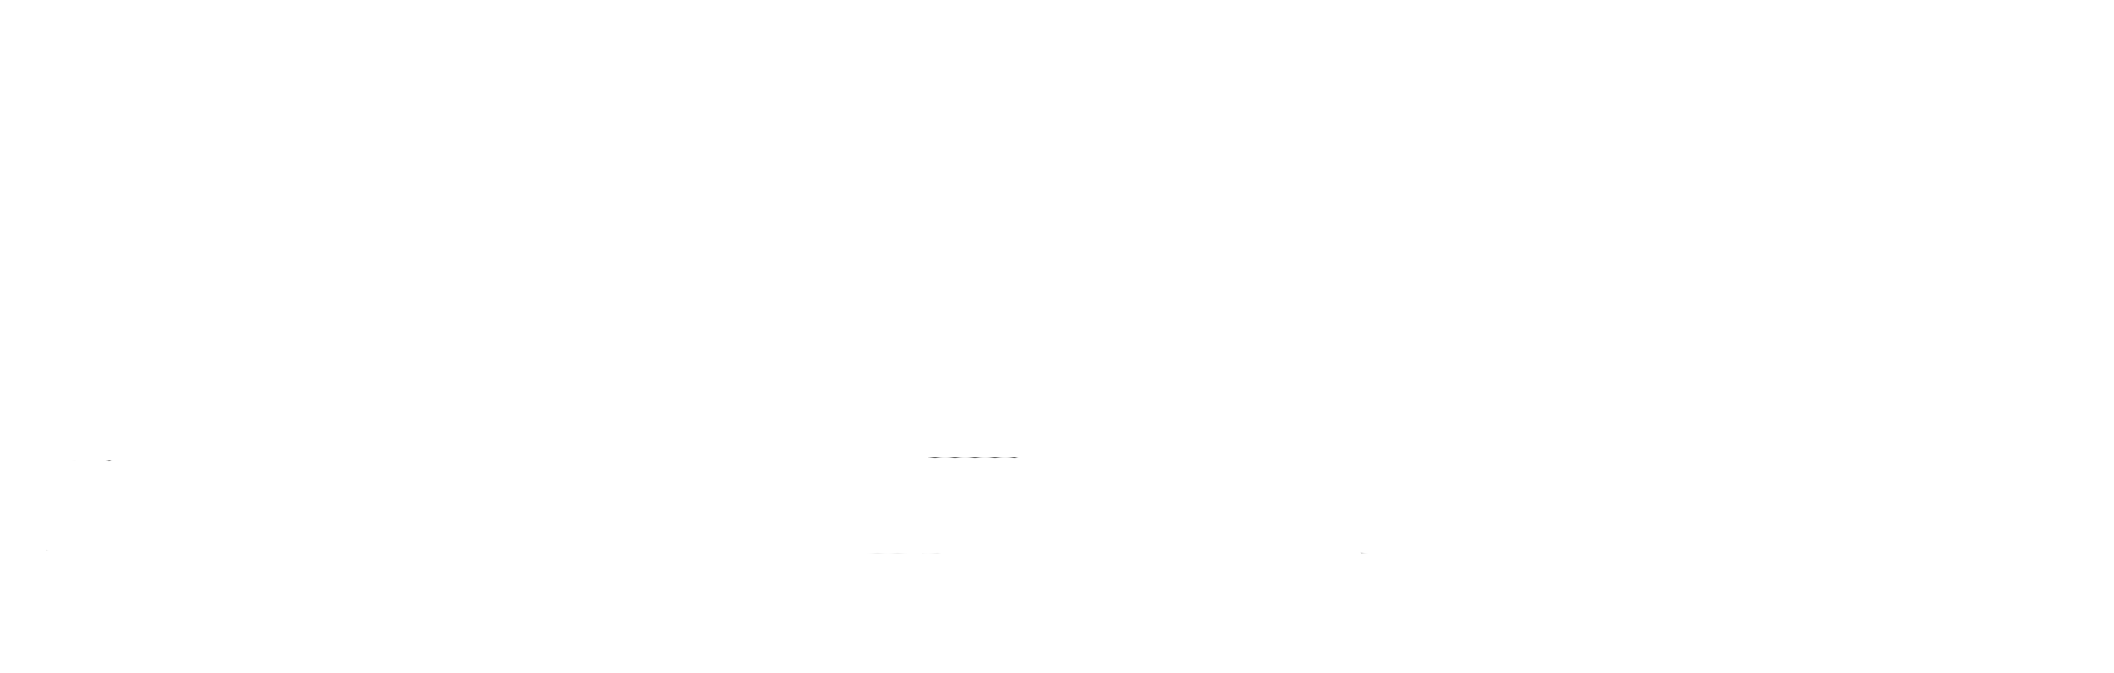 Iron Elegance Security Doors